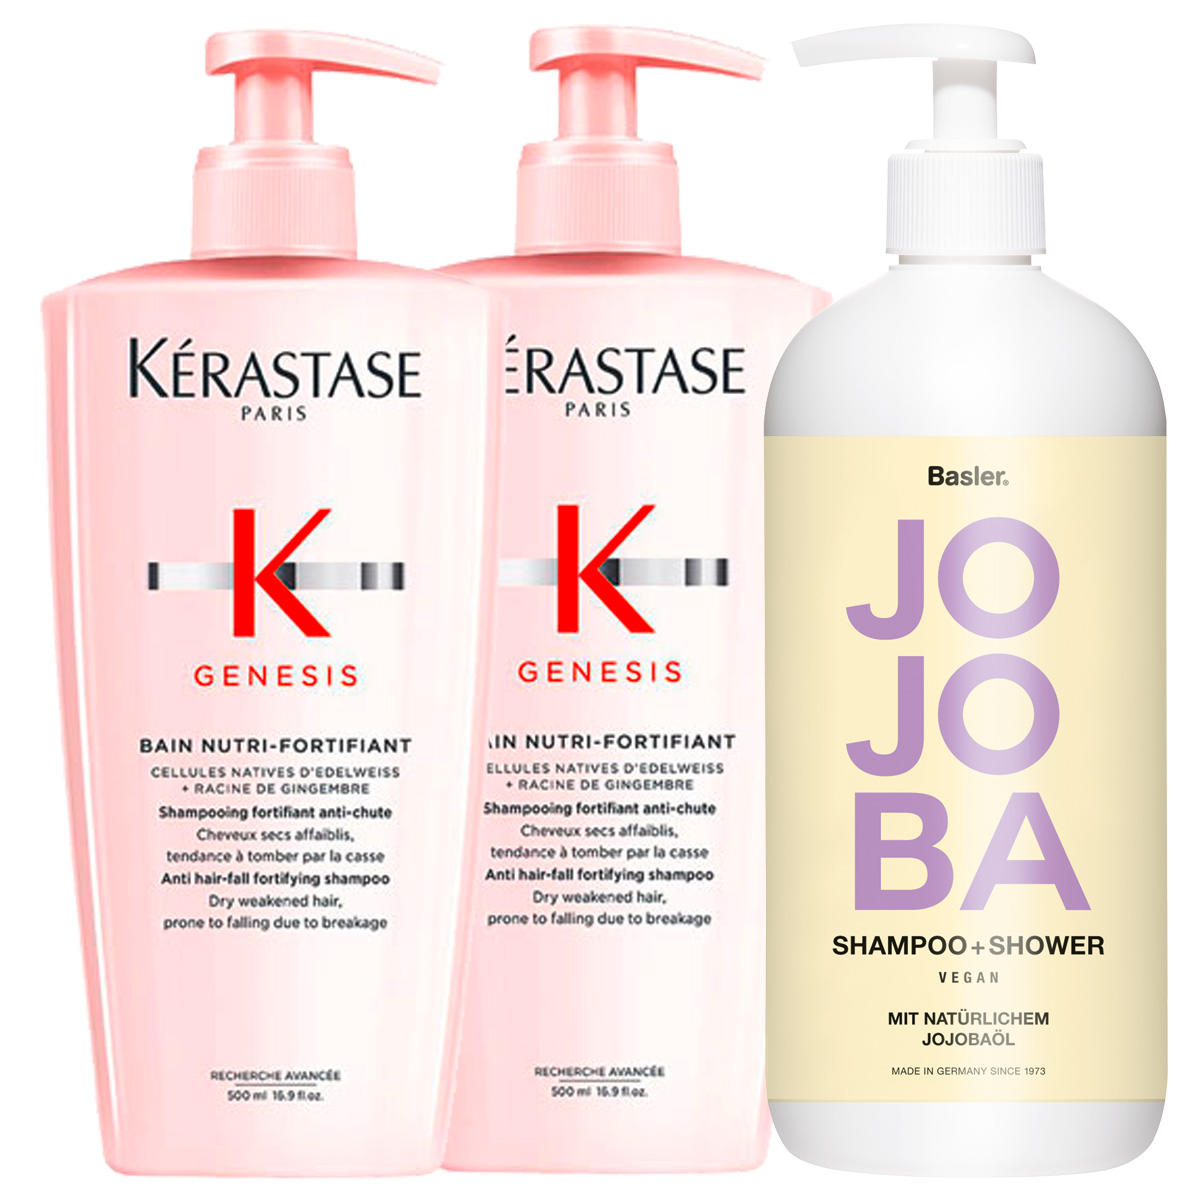 Kérastase Genesis Bain Nutri-Fortifiant Bundle 2 x 500 ml + Basler Jojoba Shampoo & Shower 500 ml gratis - 1